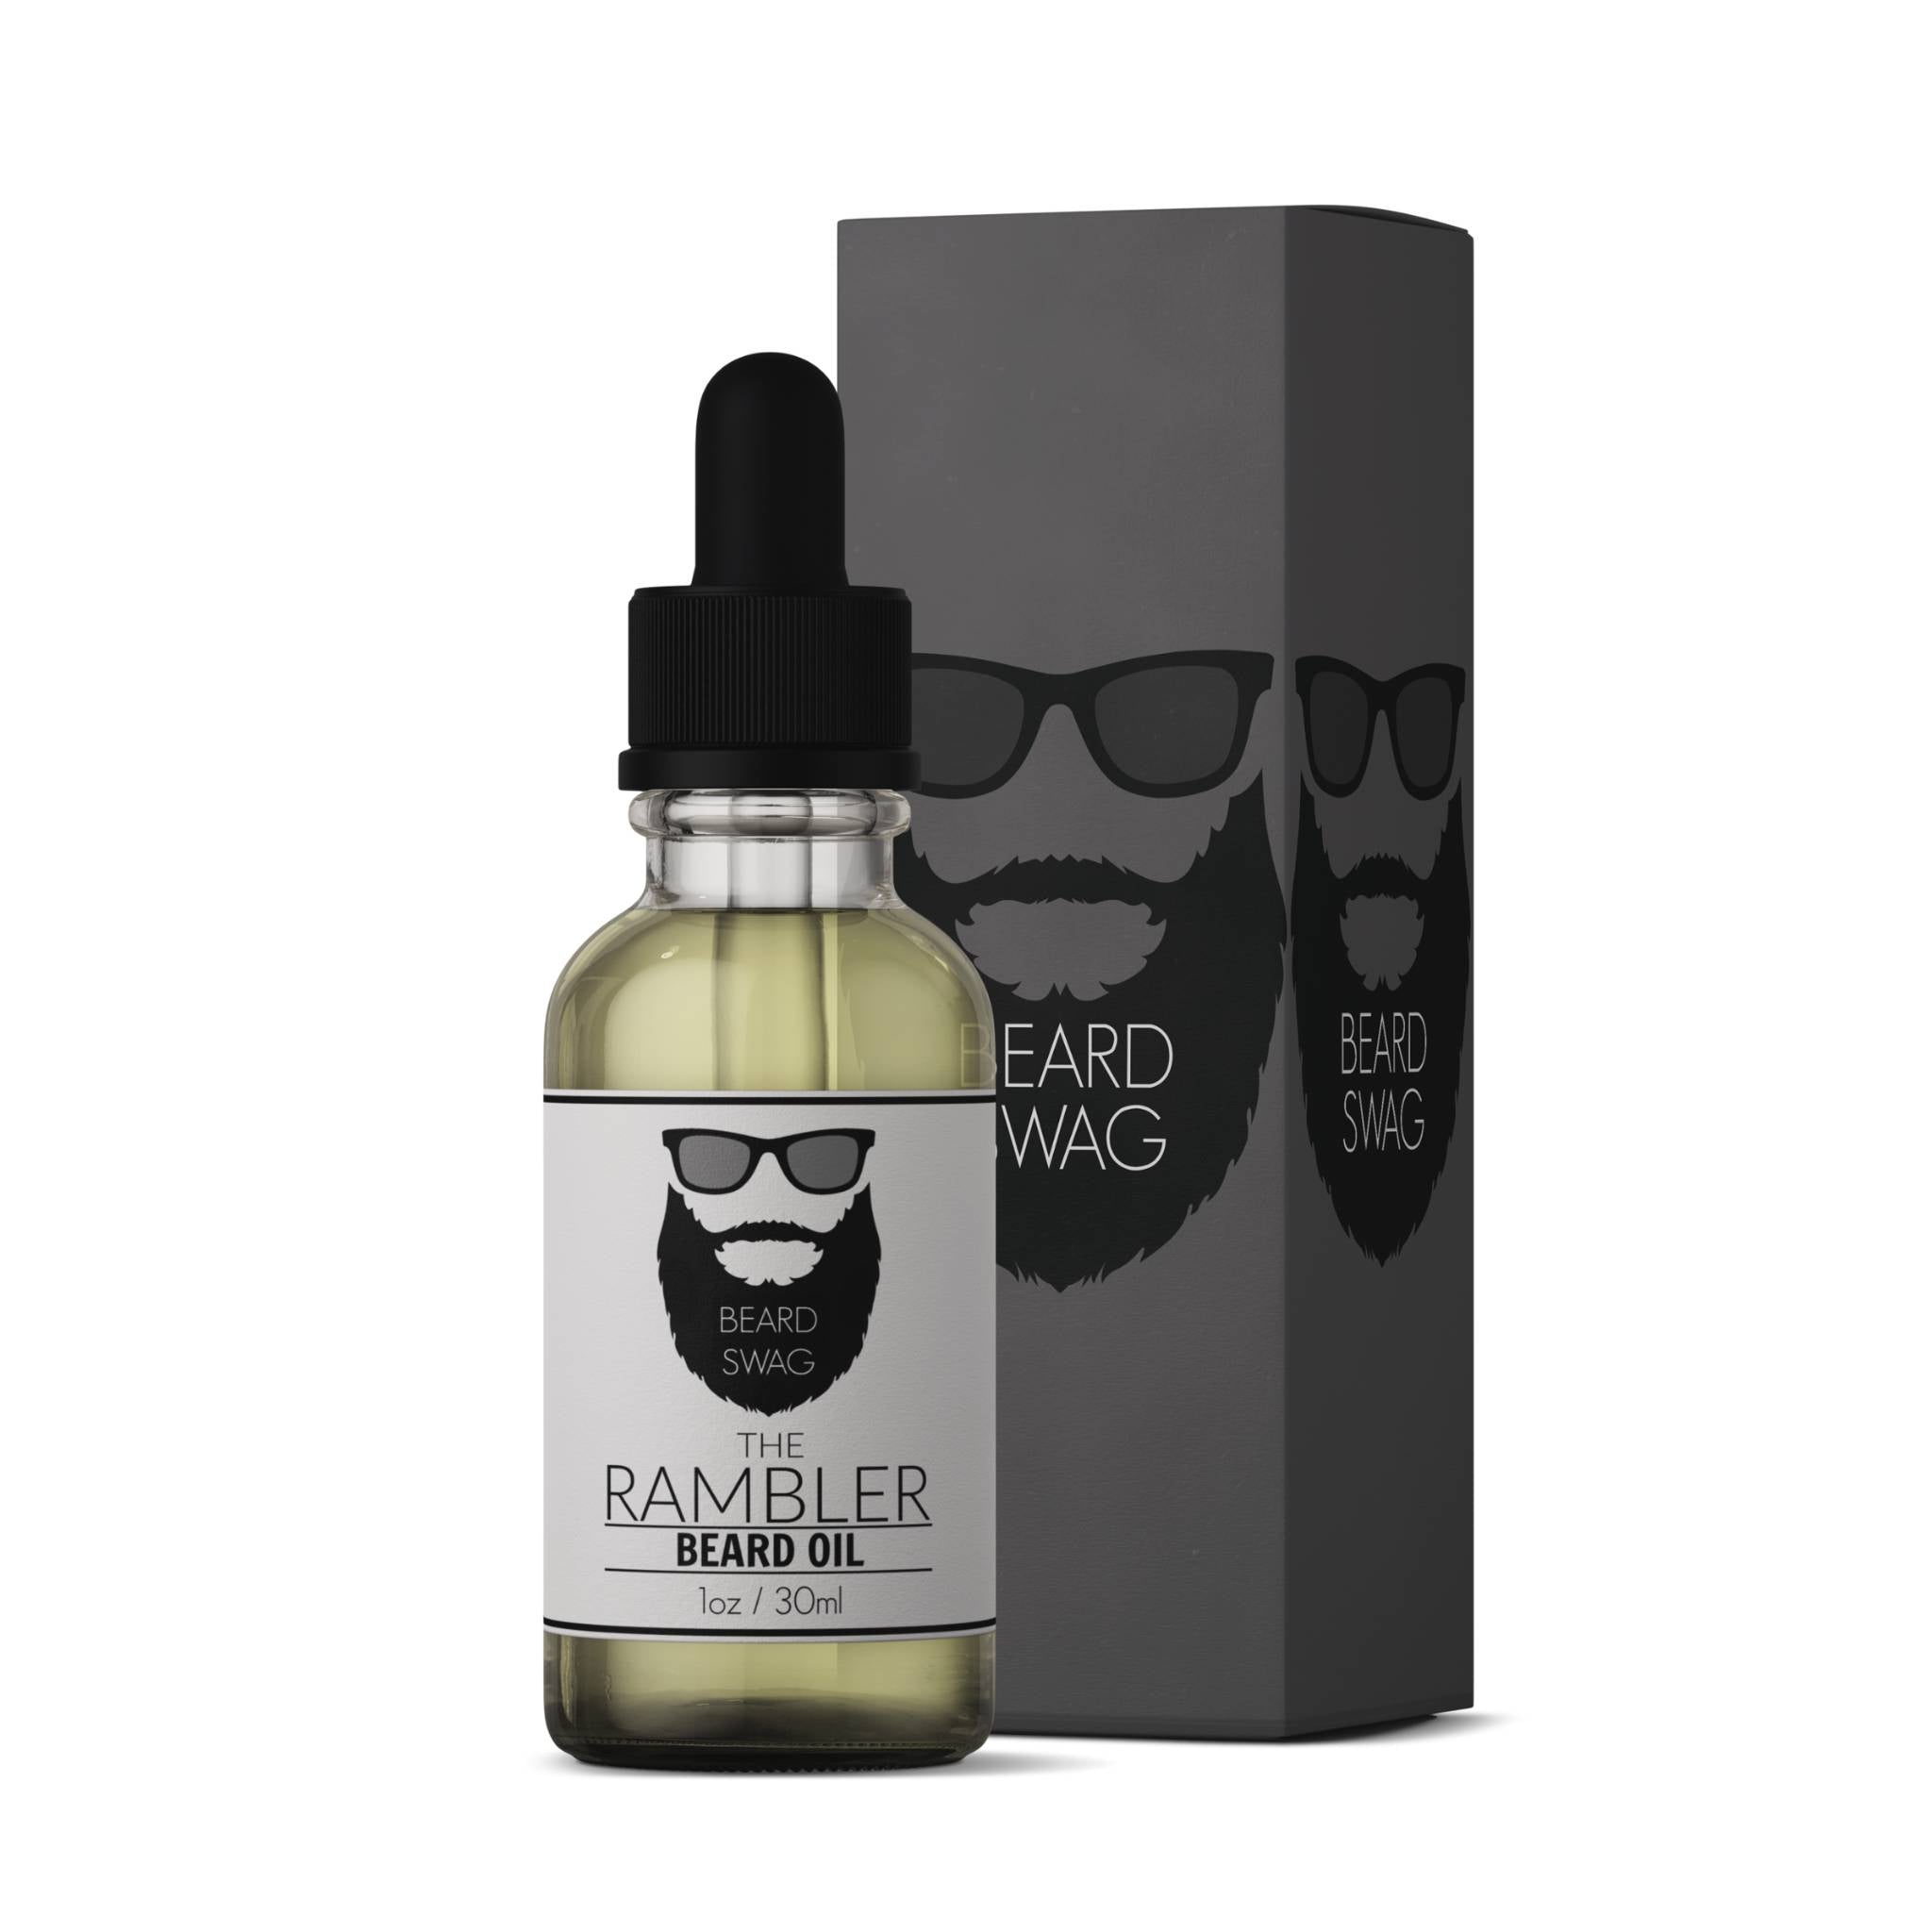 The Rambler Beard Oil - Beard Swag